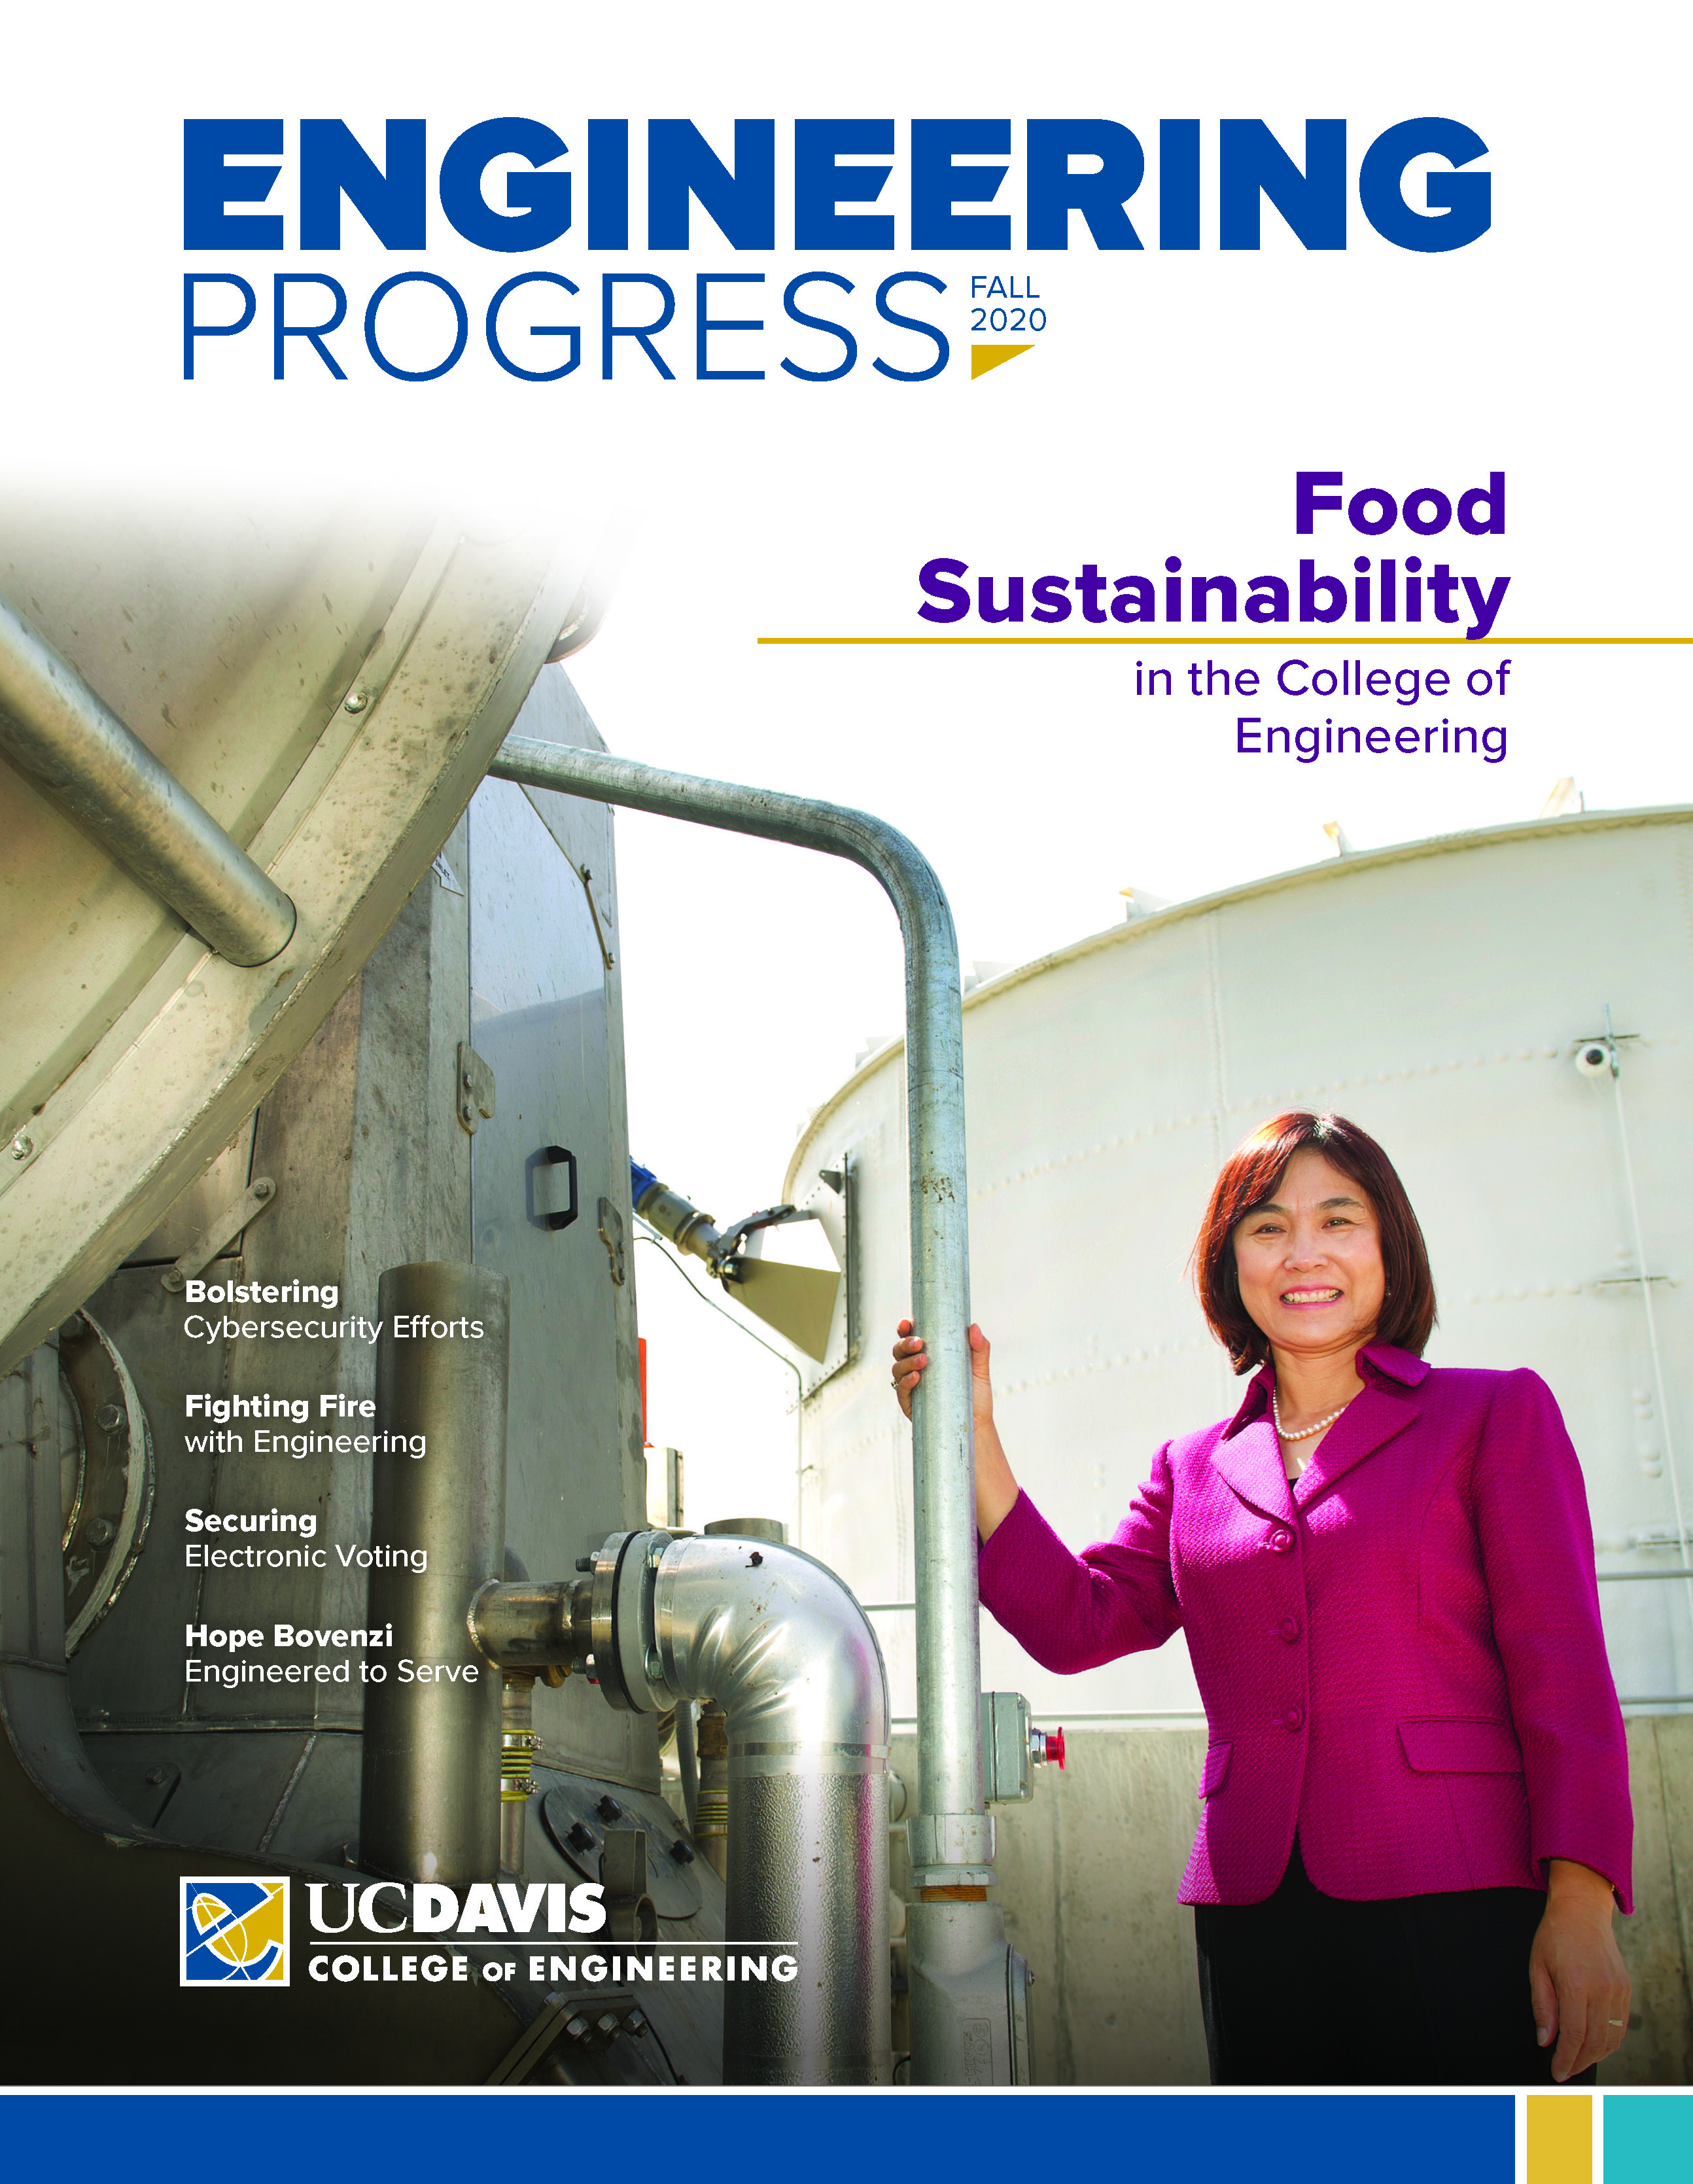 Cover of Engineering Progress Fall 2020 magazine